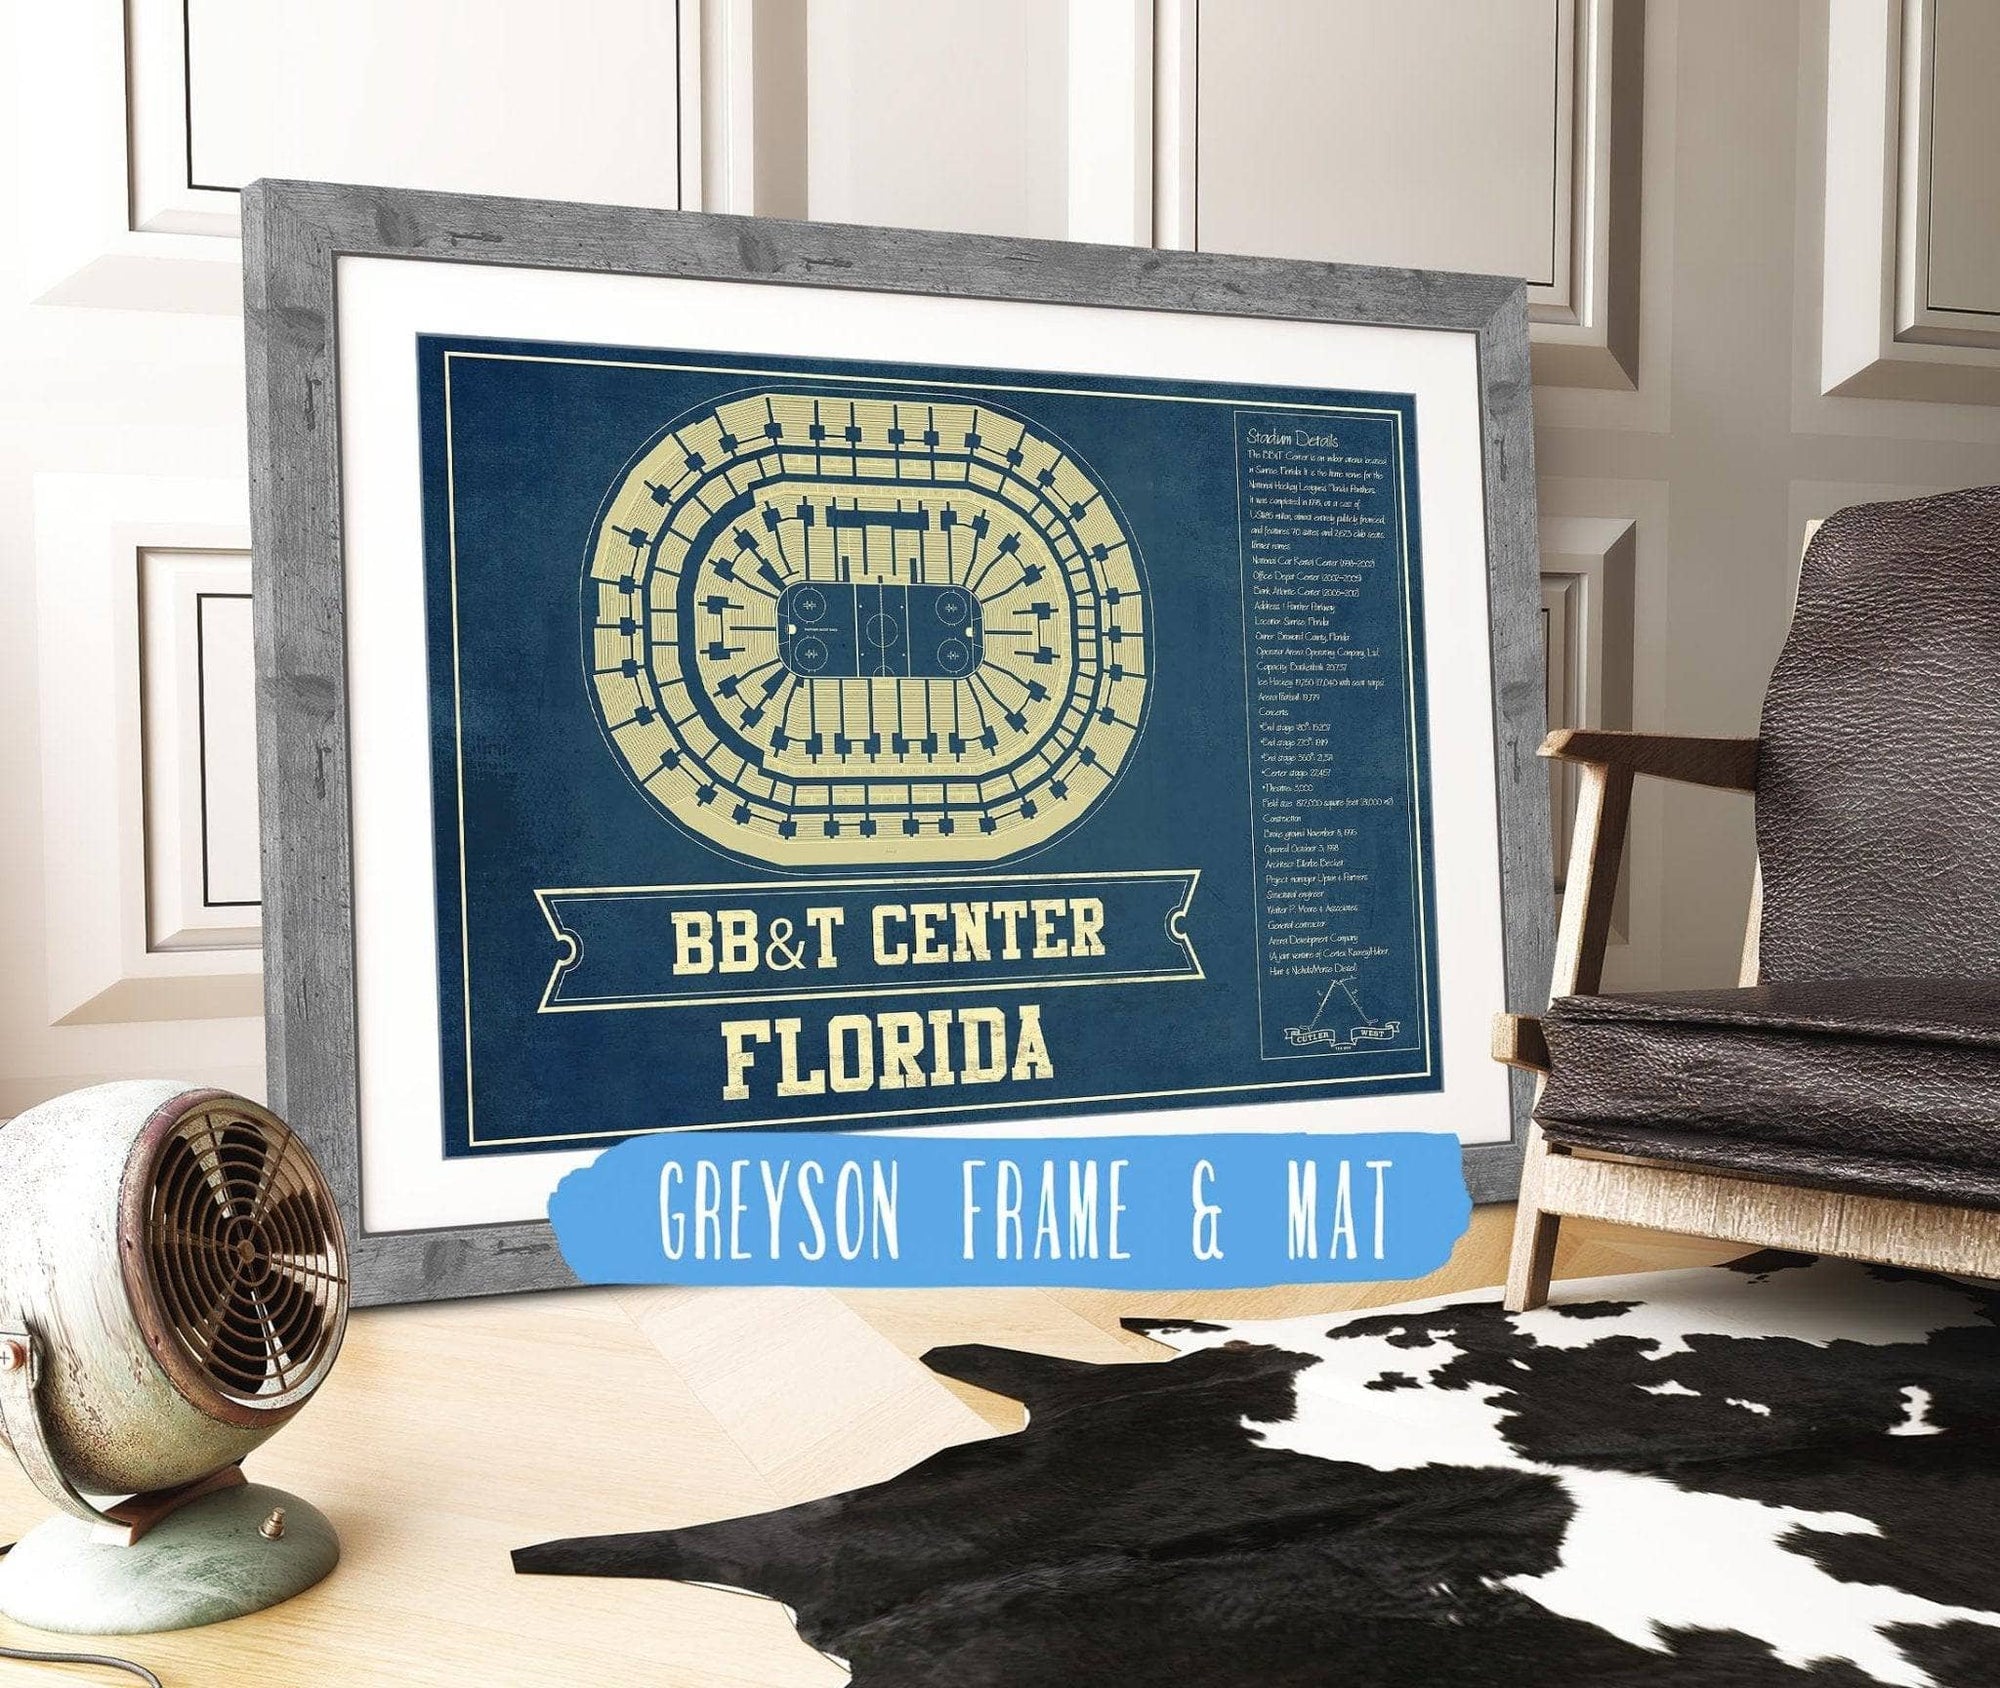 Cutler West 14" x 11" / Greyson Frame & Mat Florida Panthers BB&T Center Seating Chart - Vintage Hockey Print 659981334_79739